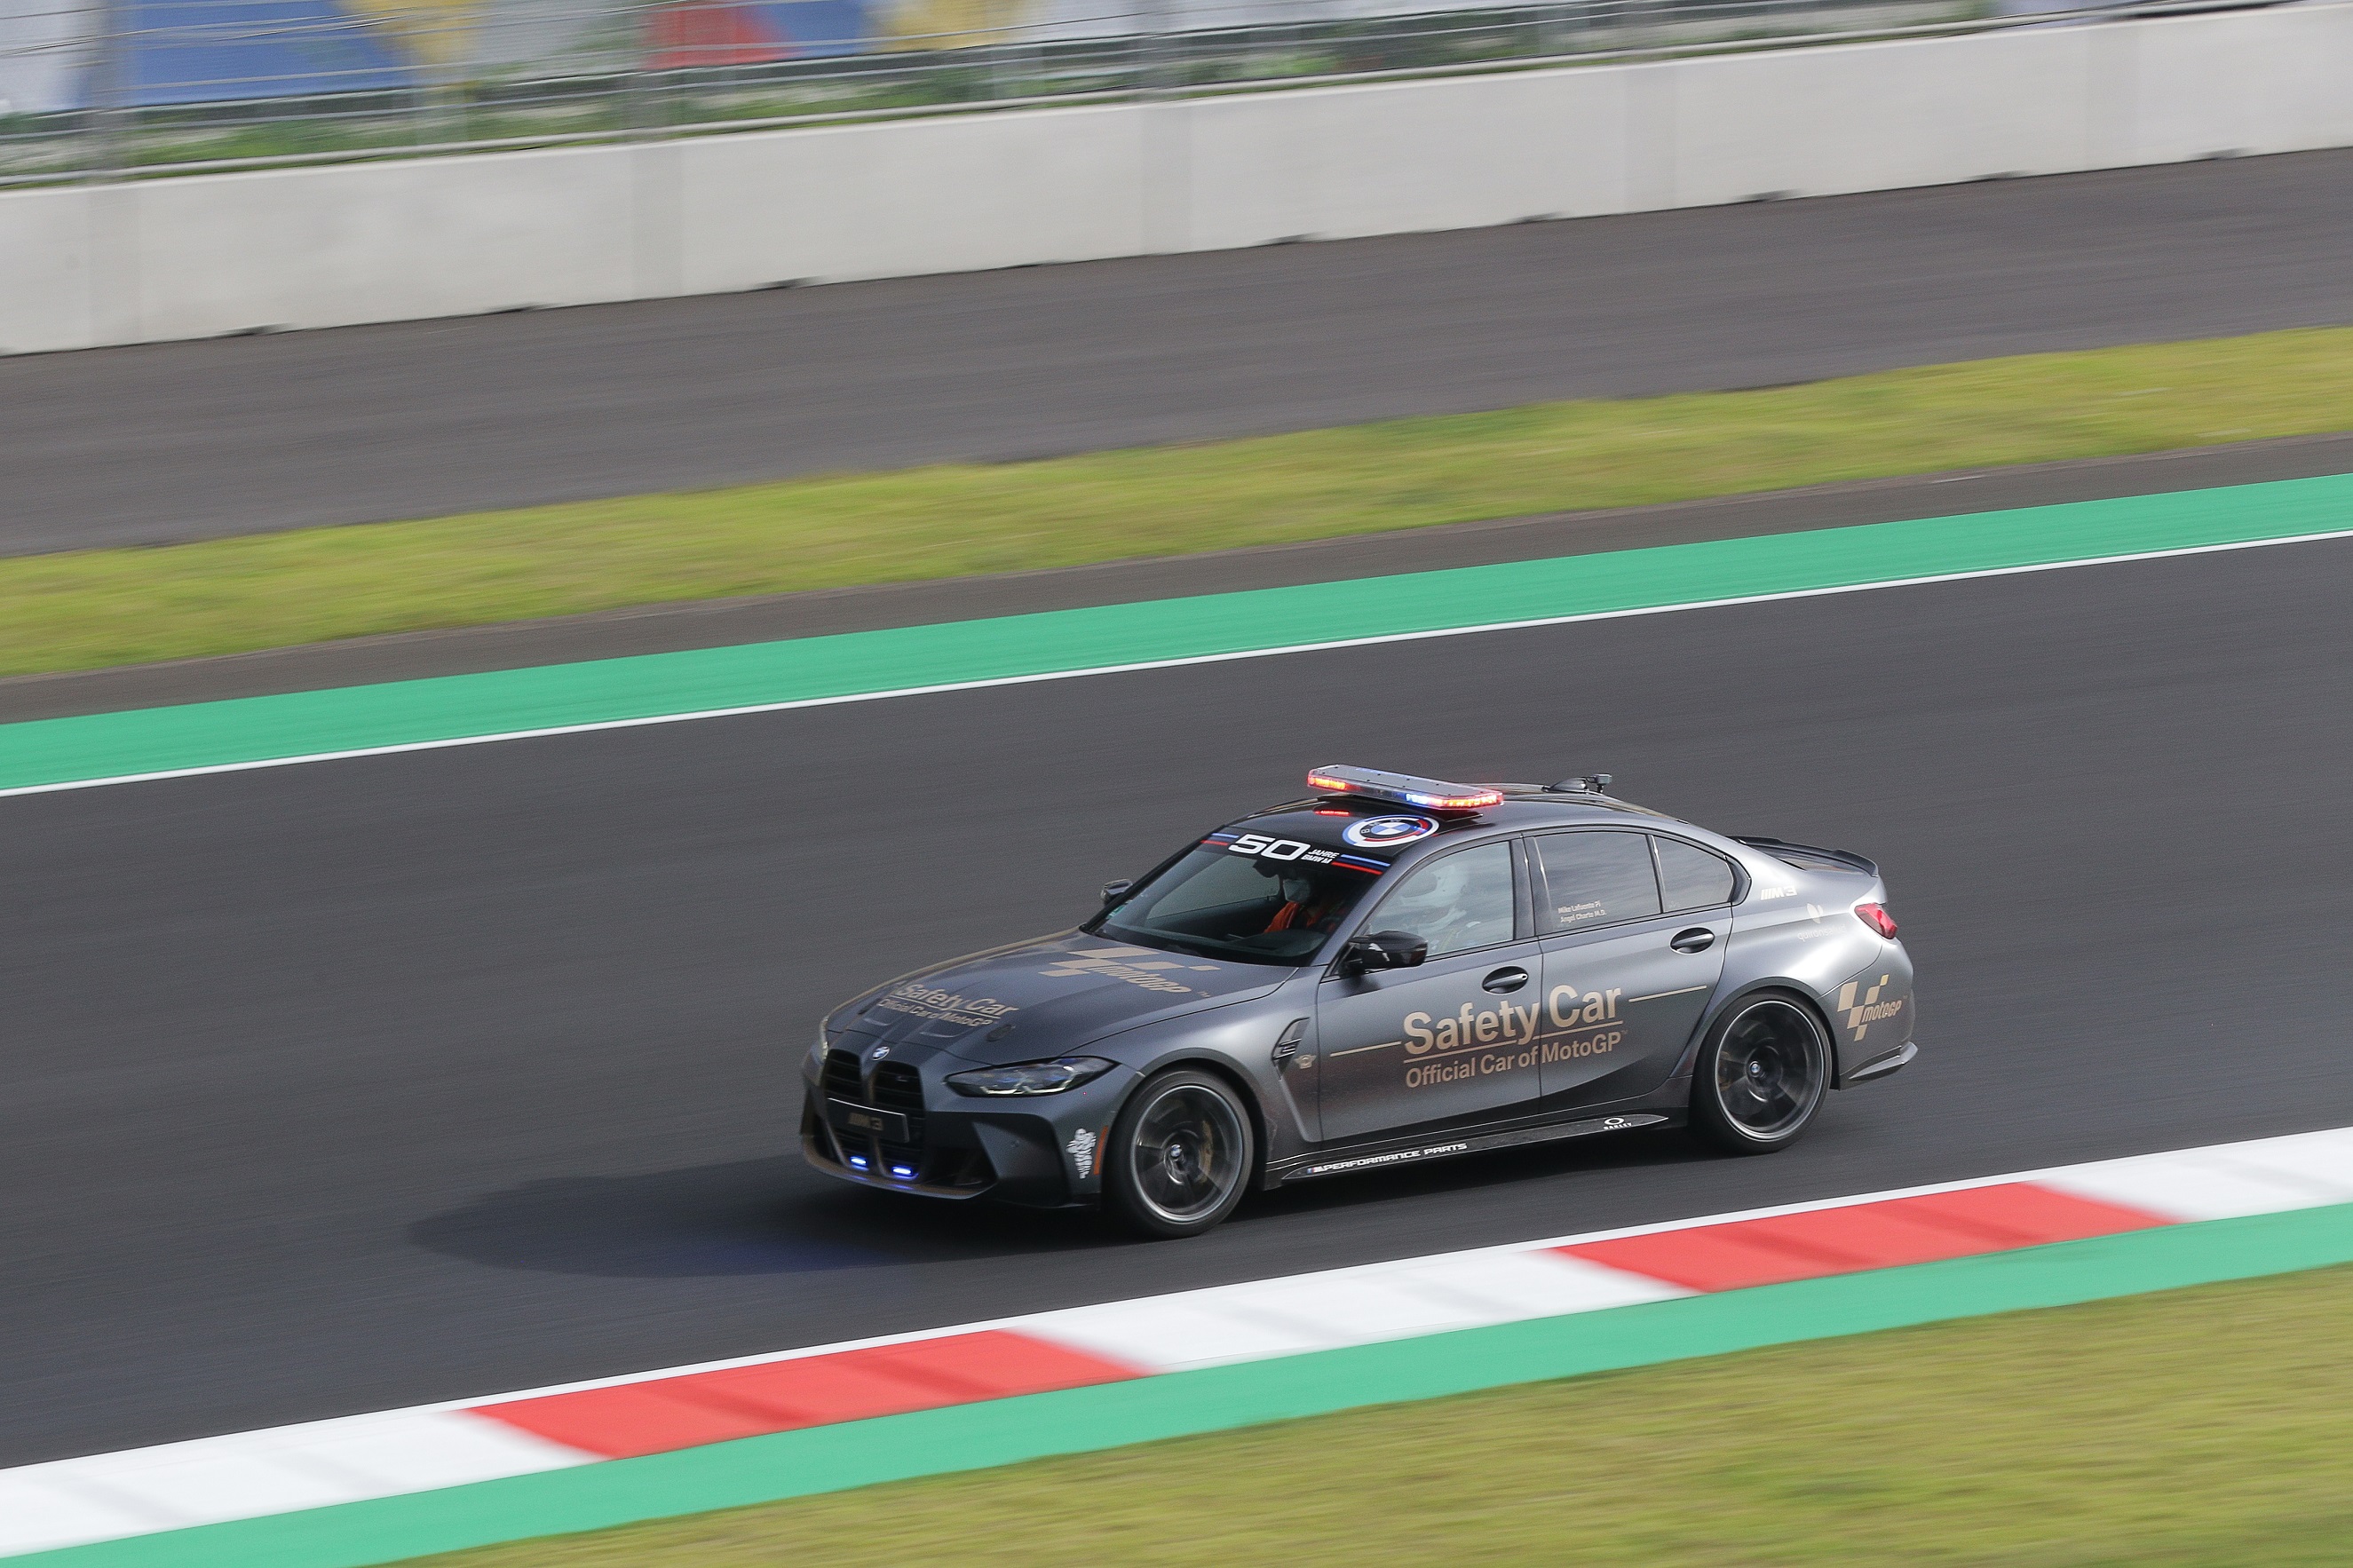 BMW Turunkan Mobil Seri Motorsport untuk Safety Car di Sirkuit Mandalika